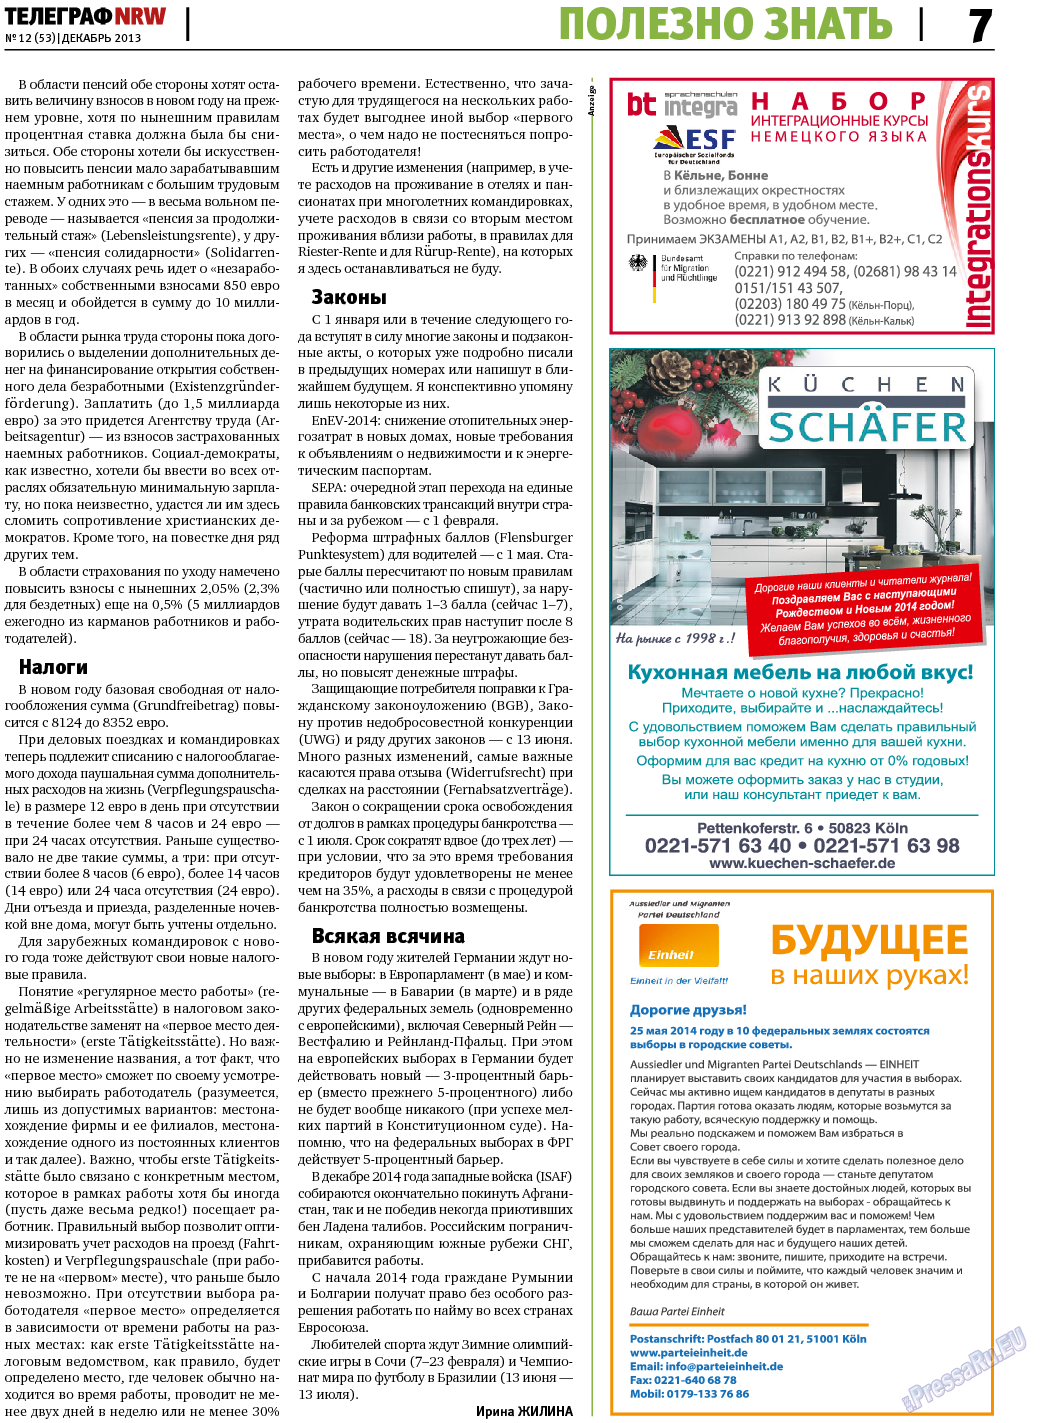 Телеграф NRW, газета. 2013 №12 стр.7